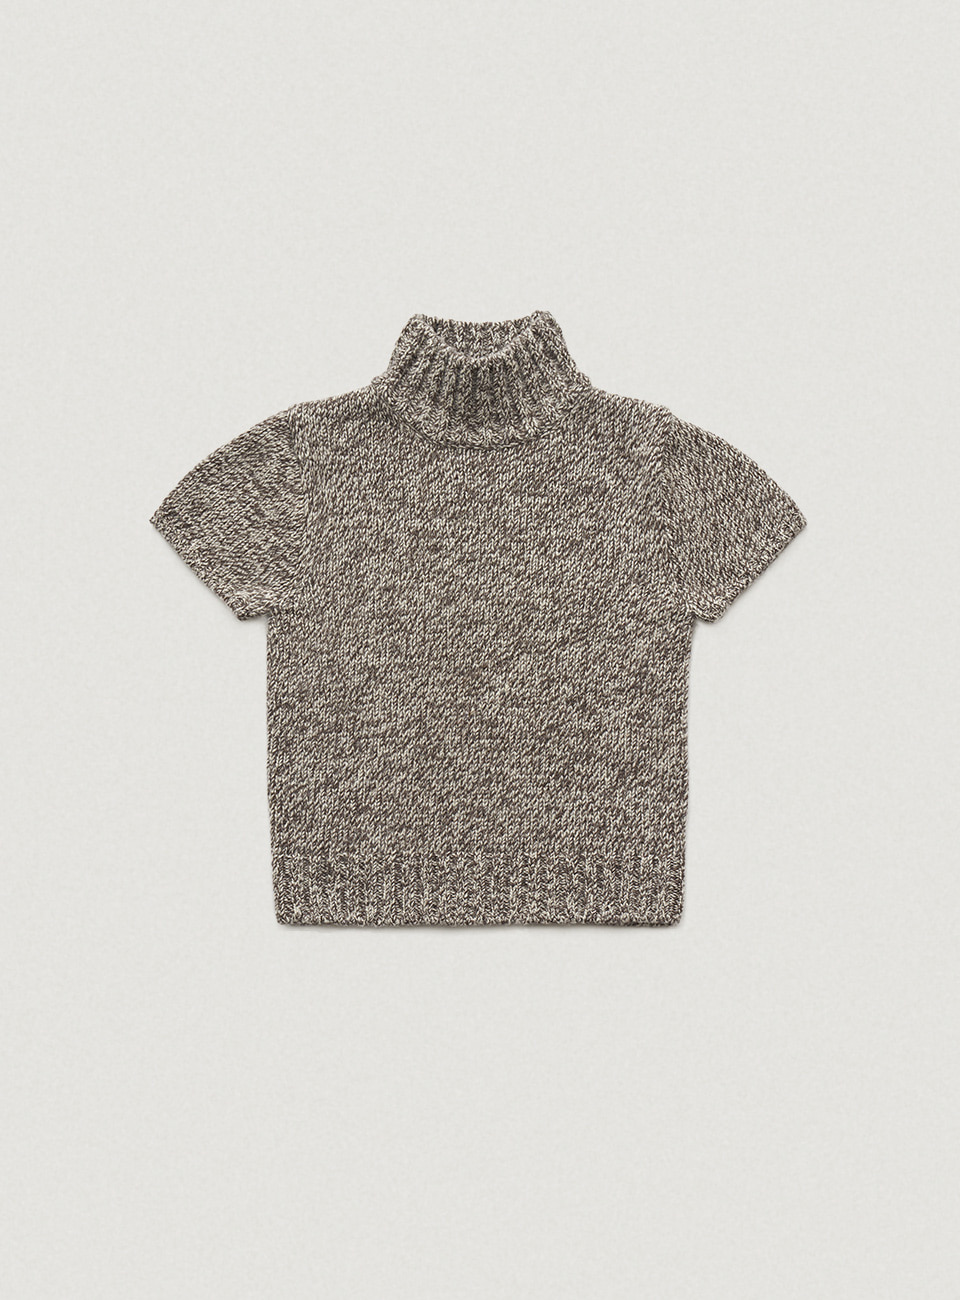 Melange Half Turtleneck Knit Sweater[2월 초 순차 배송]